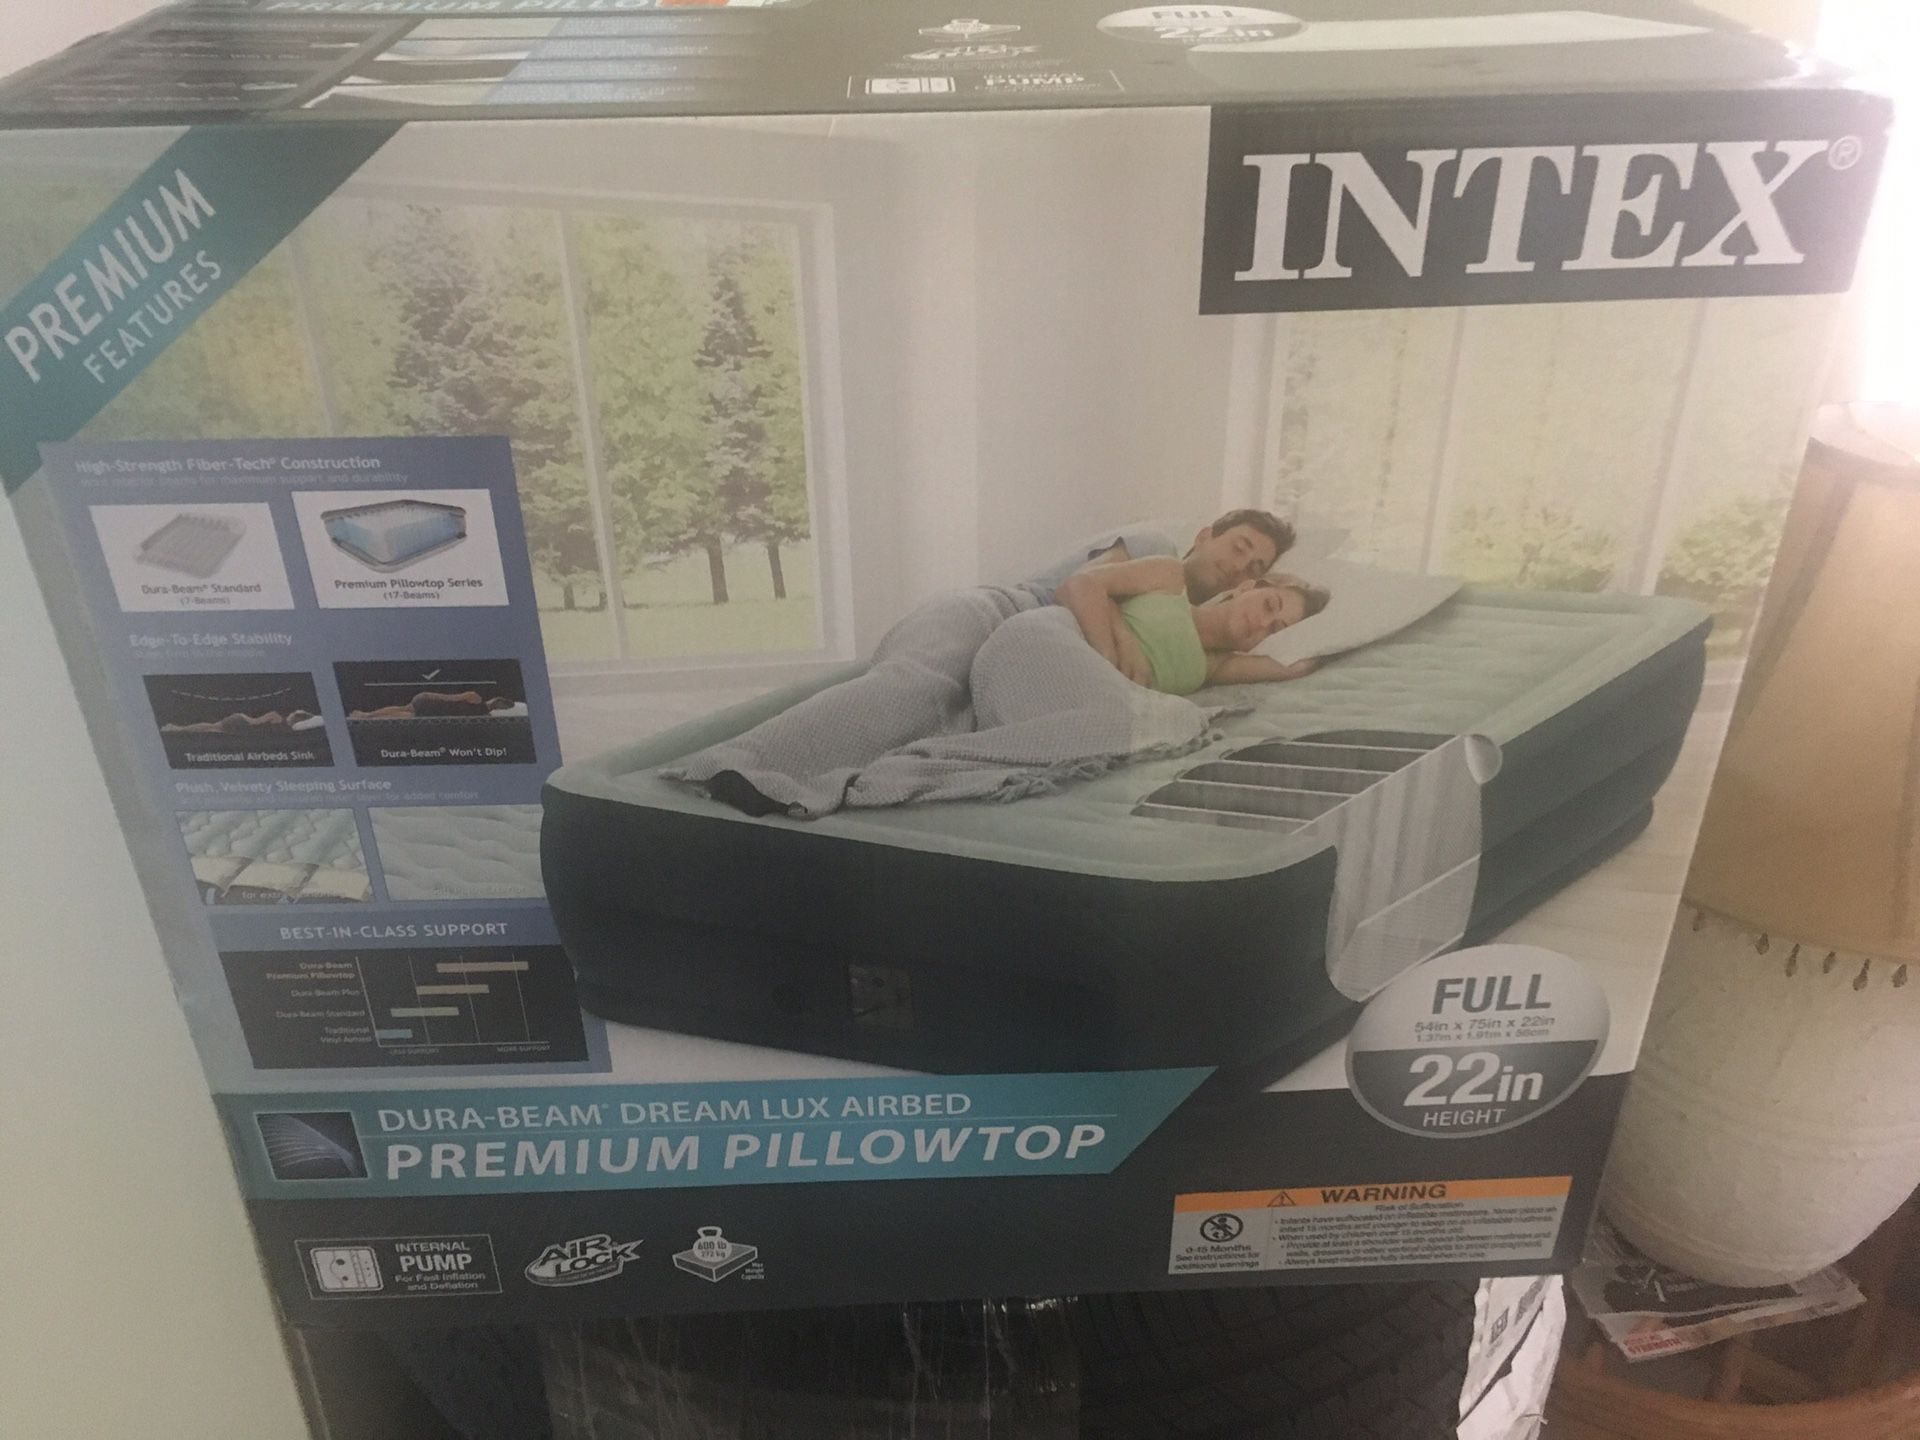 Full air mattress